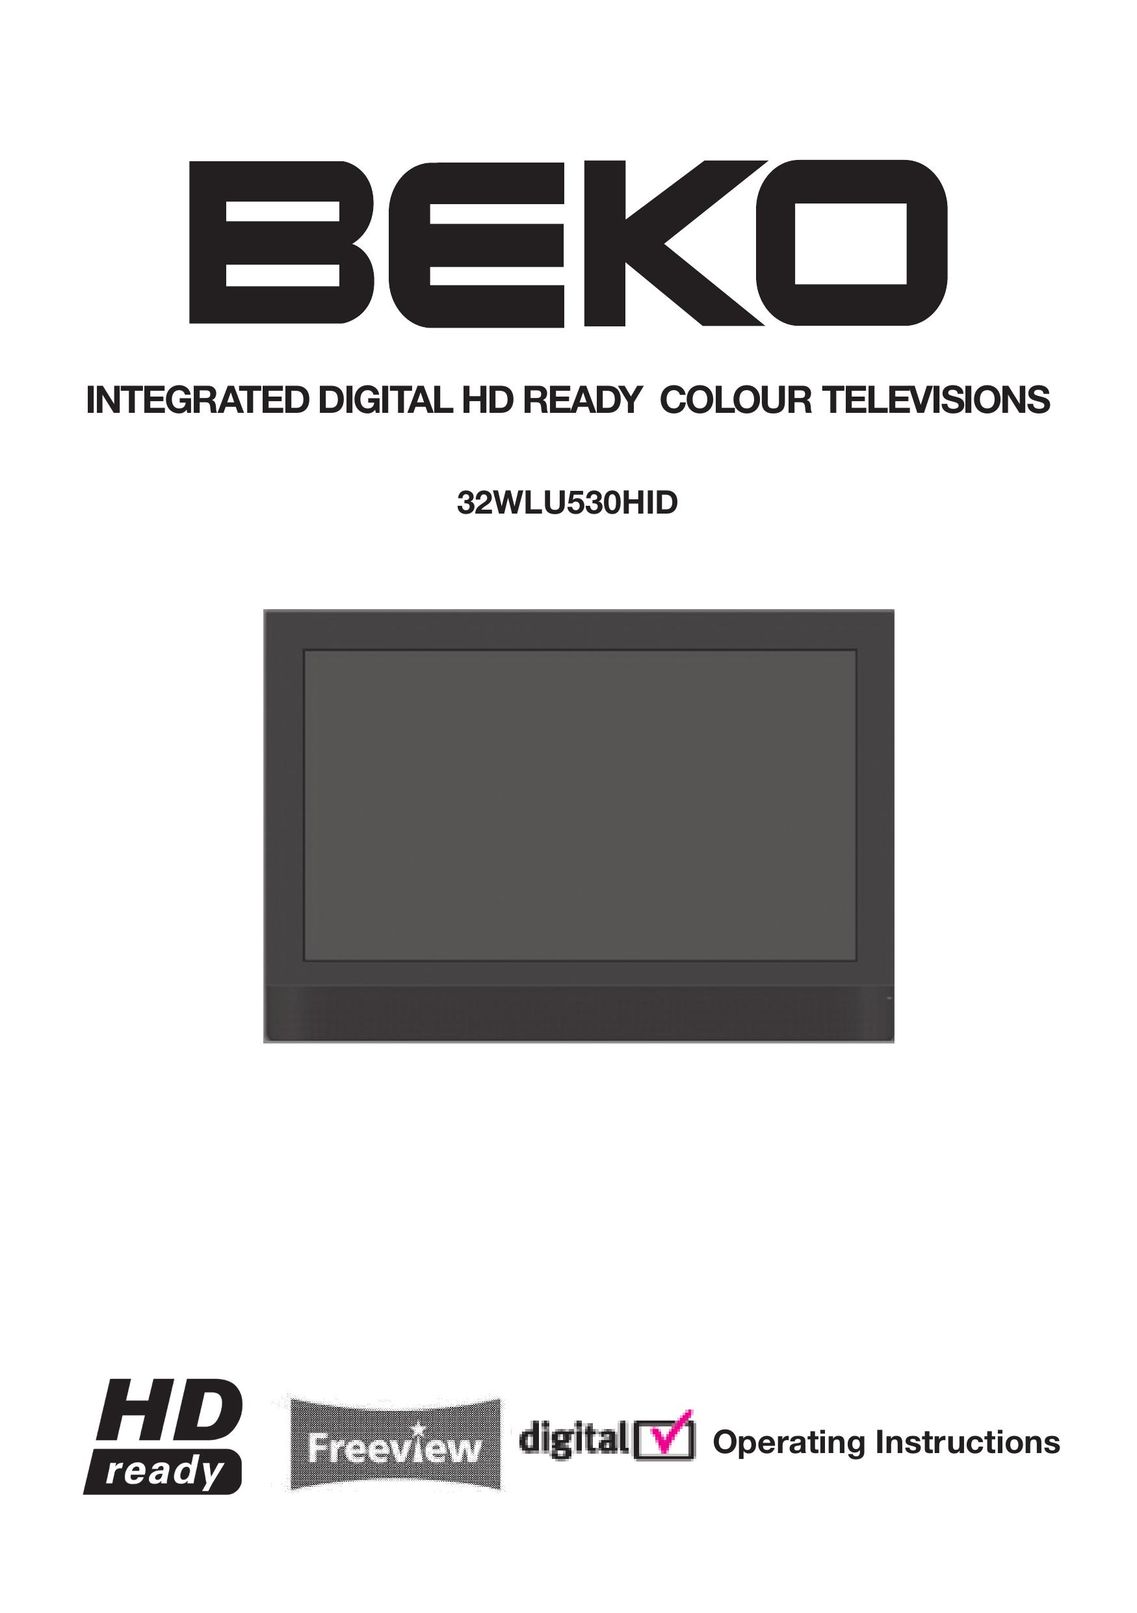 Beko 32WLU530HID CRT Television User Manual (Page 1)